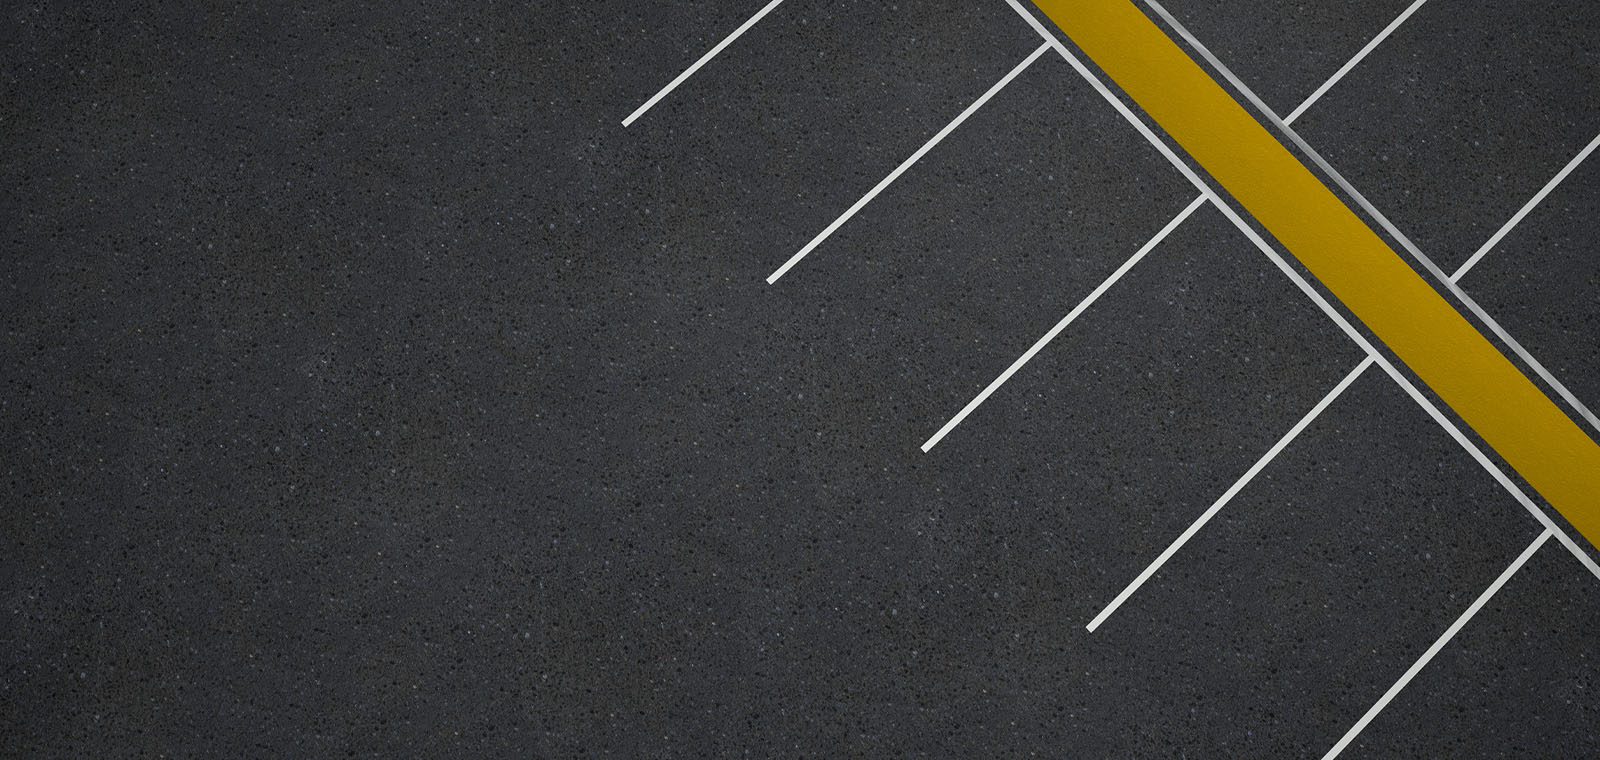 Lines in an empty parking lot appear as markings on a ruler.